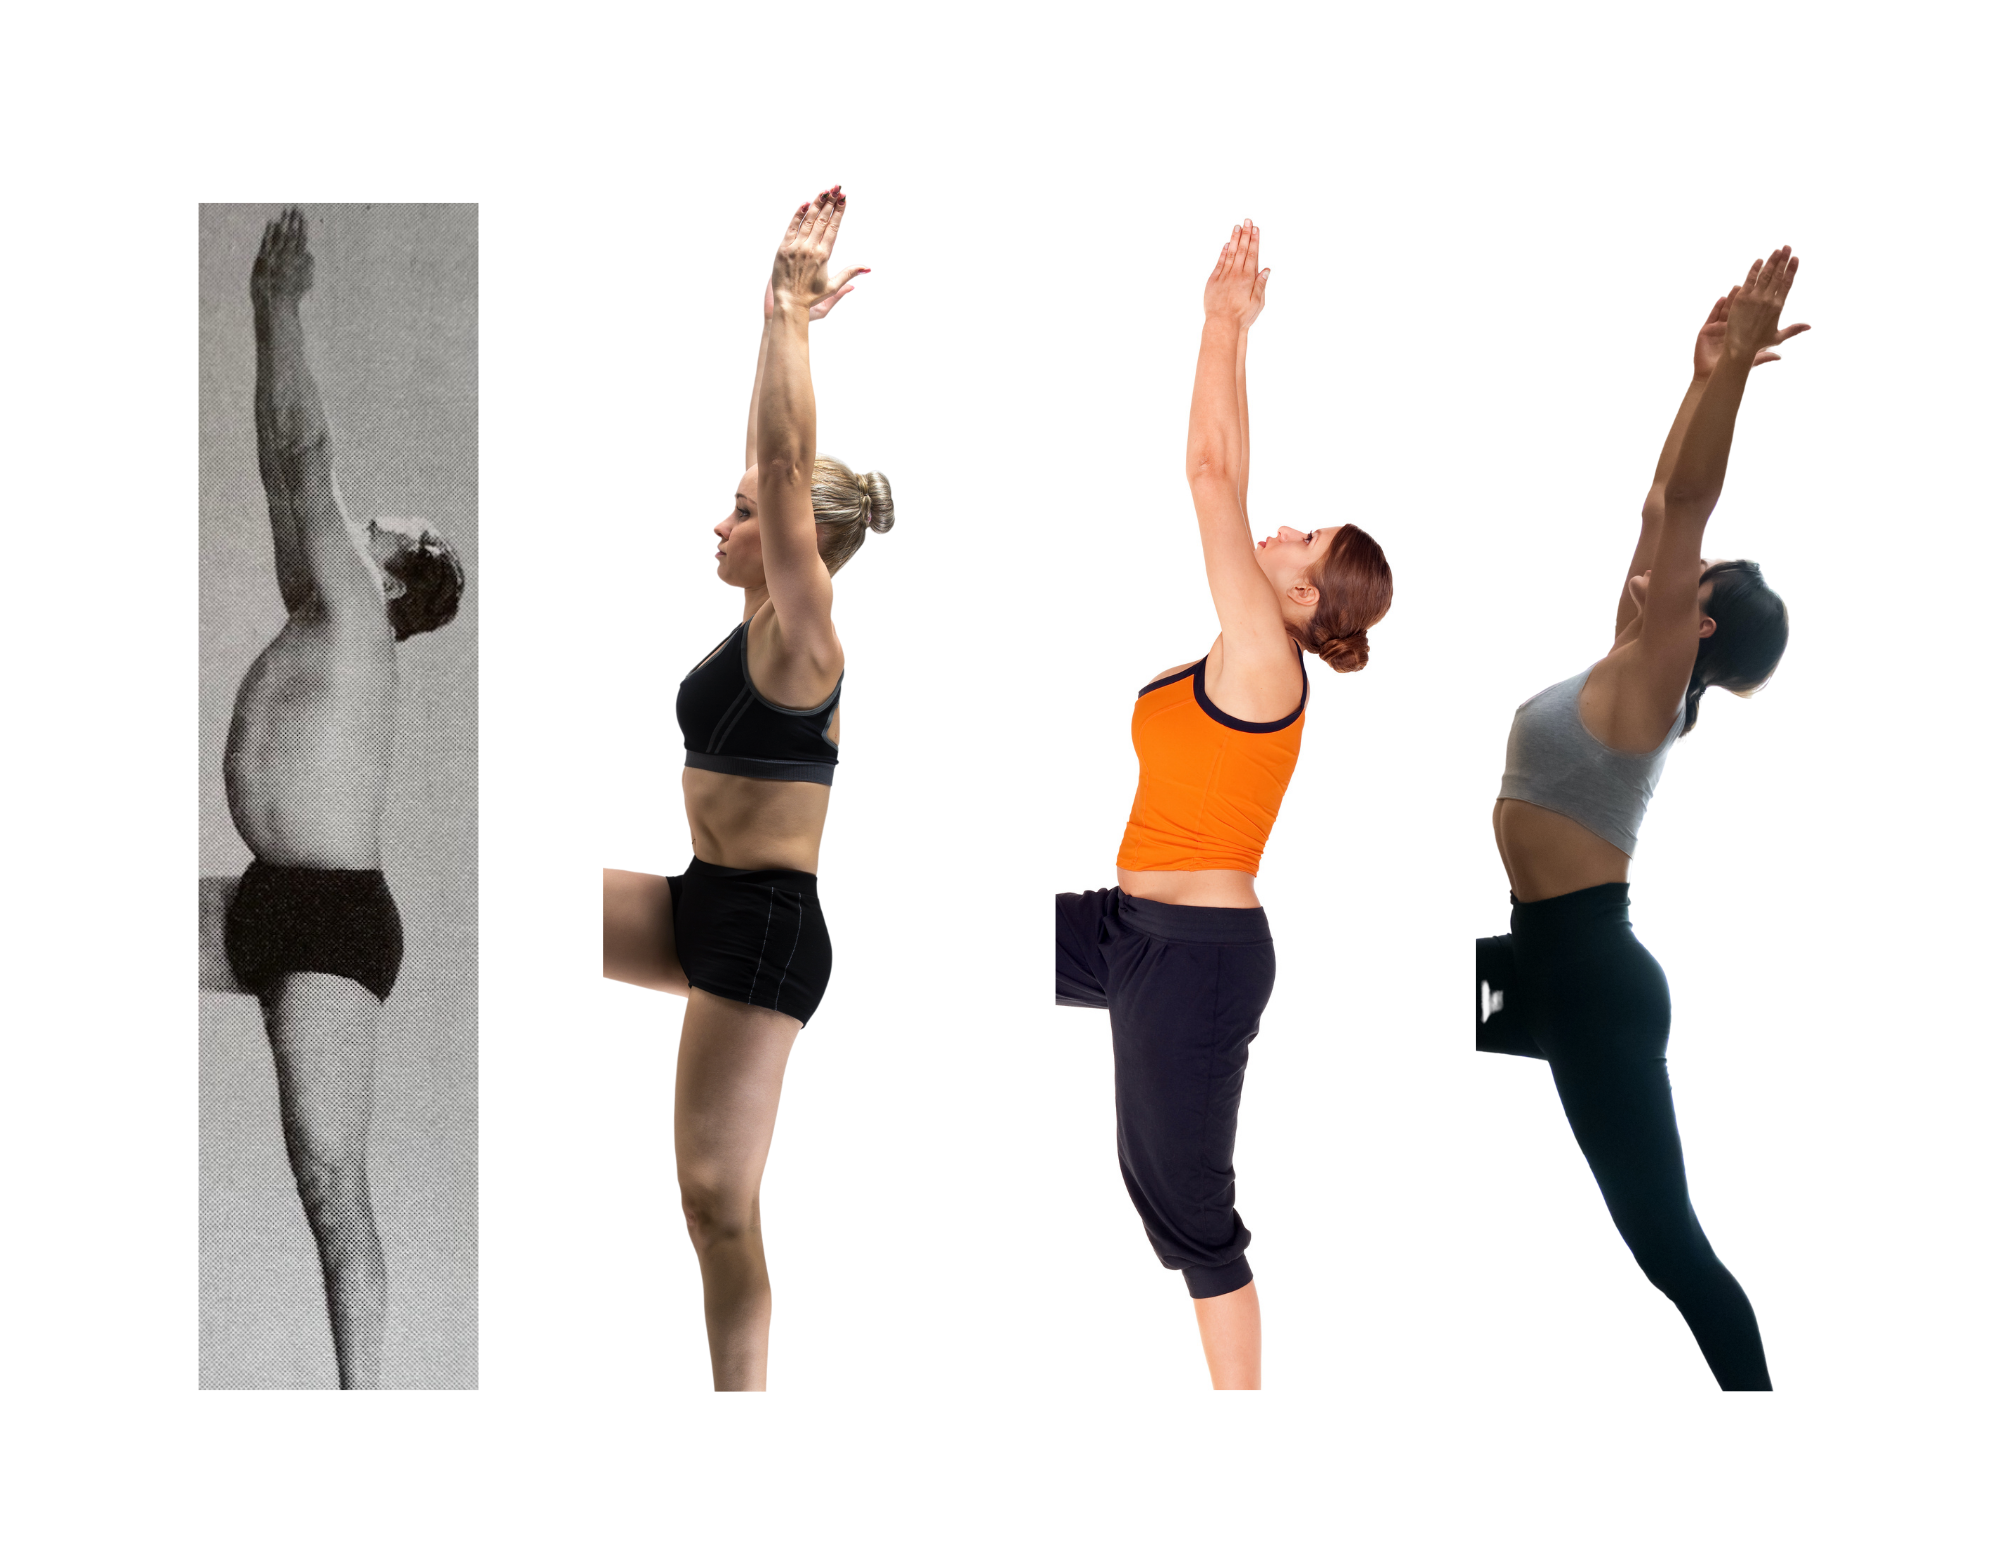 Bikram Yoga Posture Sequence - YouTube